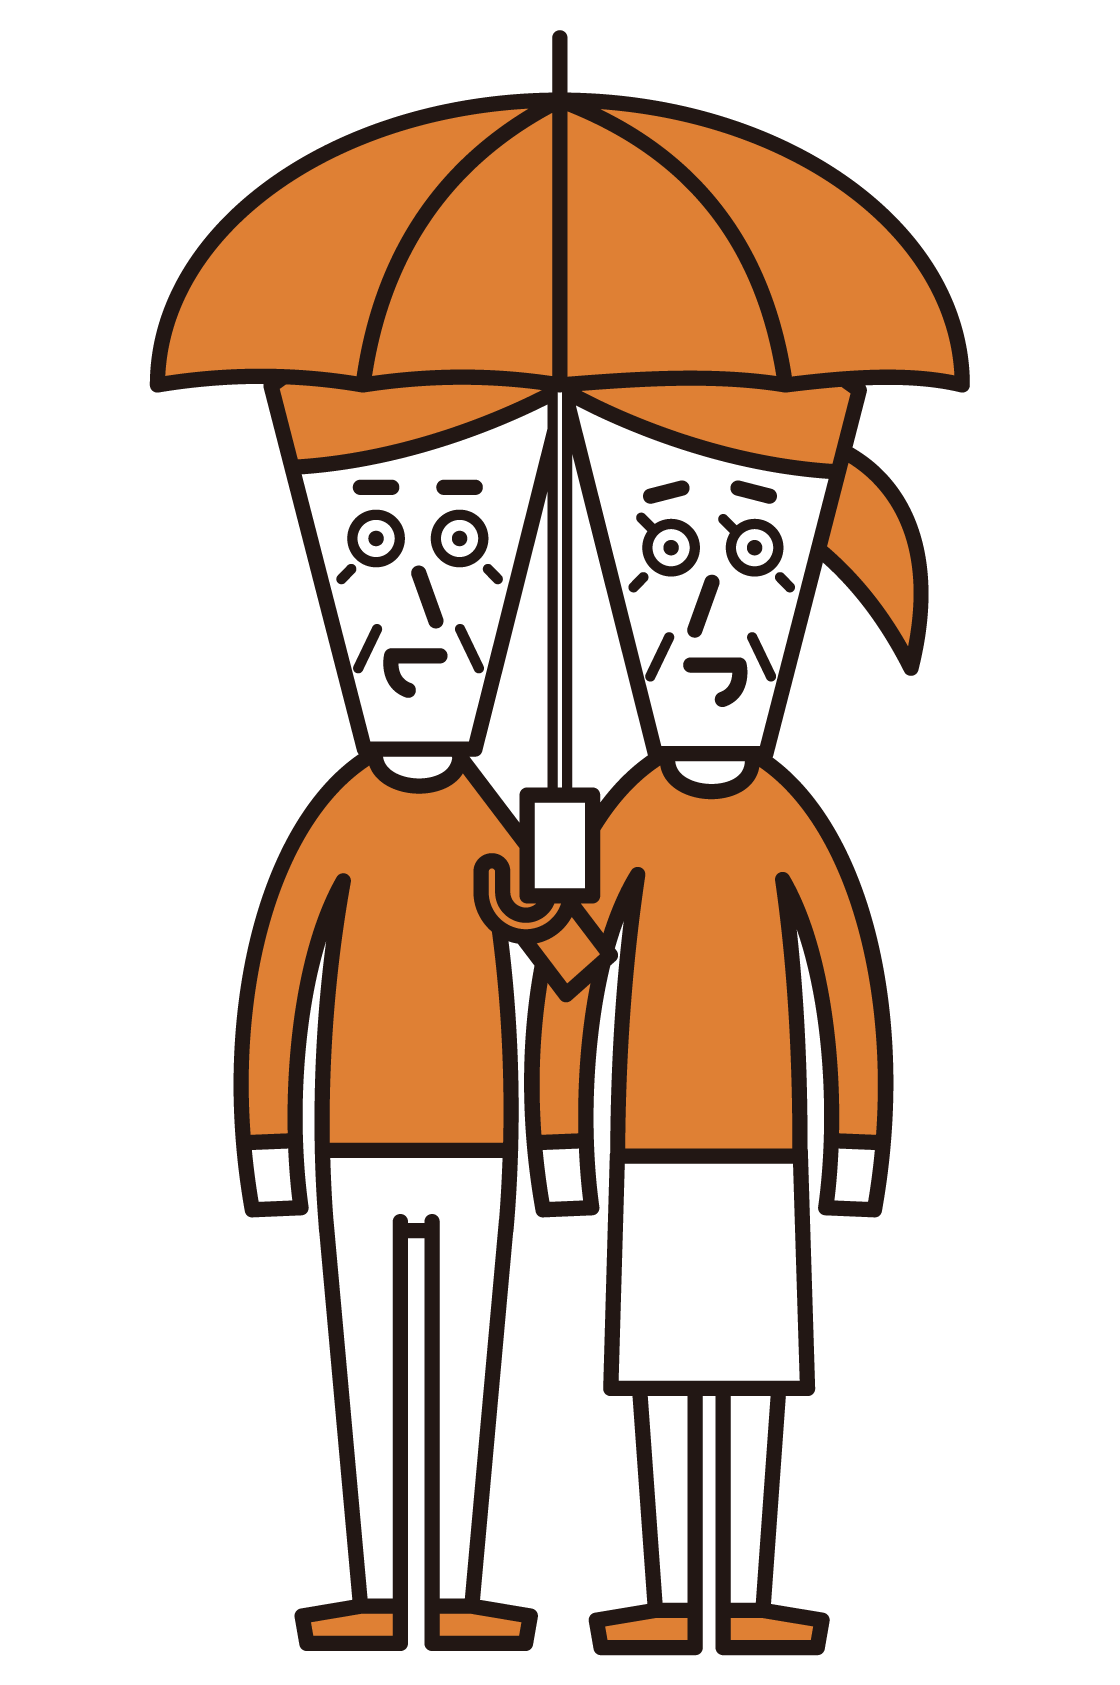 Illustration of an elderly couple holding an umbrella